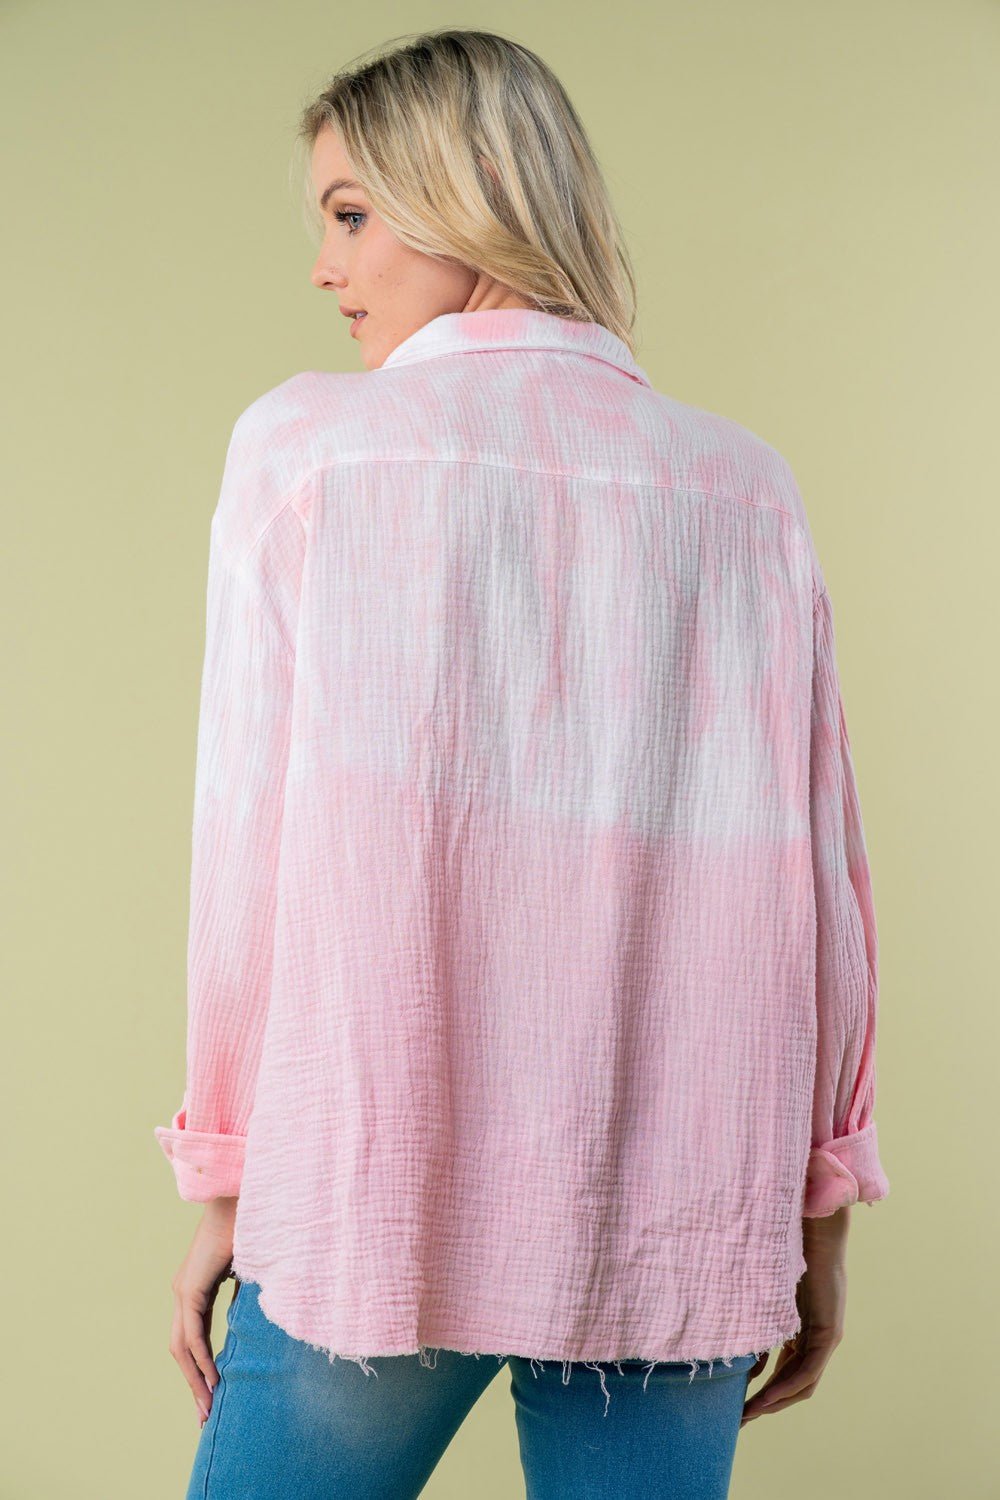 Long Sleeve Tie Dye Shirt in PinkShirtWhite Birch